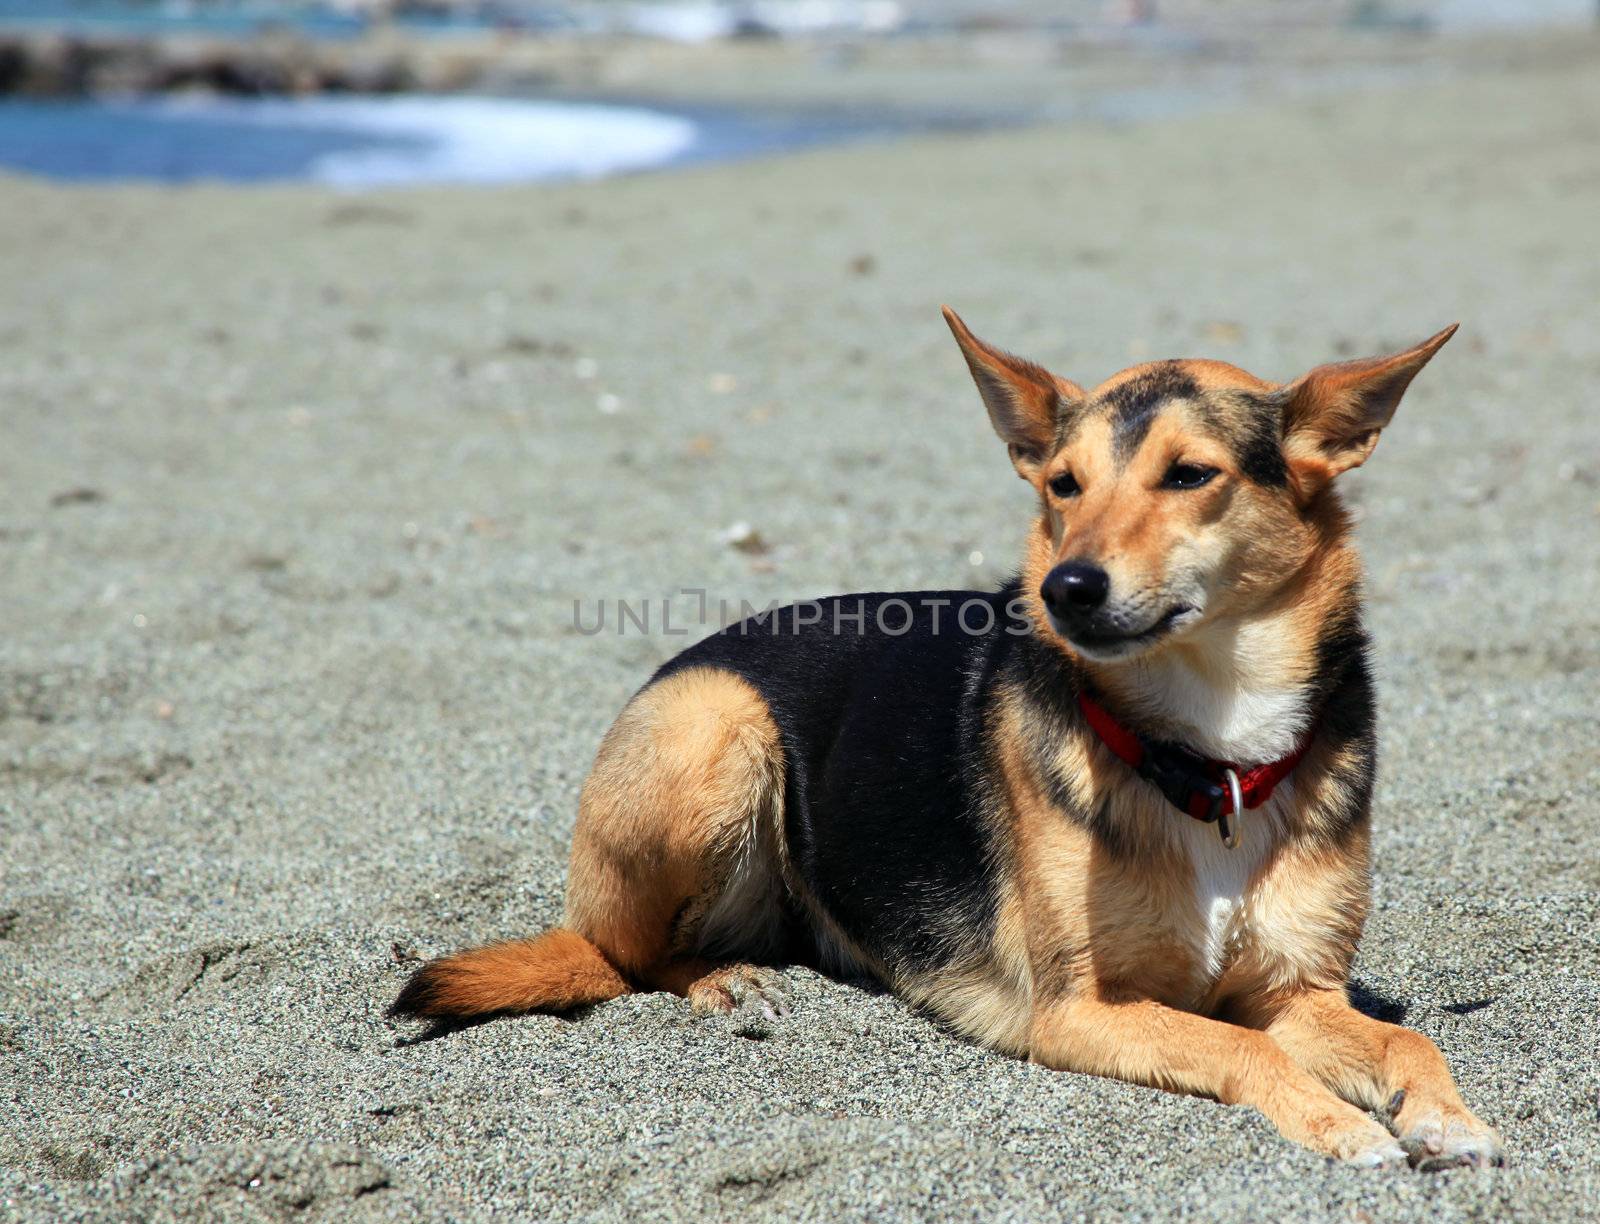 Dog on the beach by adrianocastelli